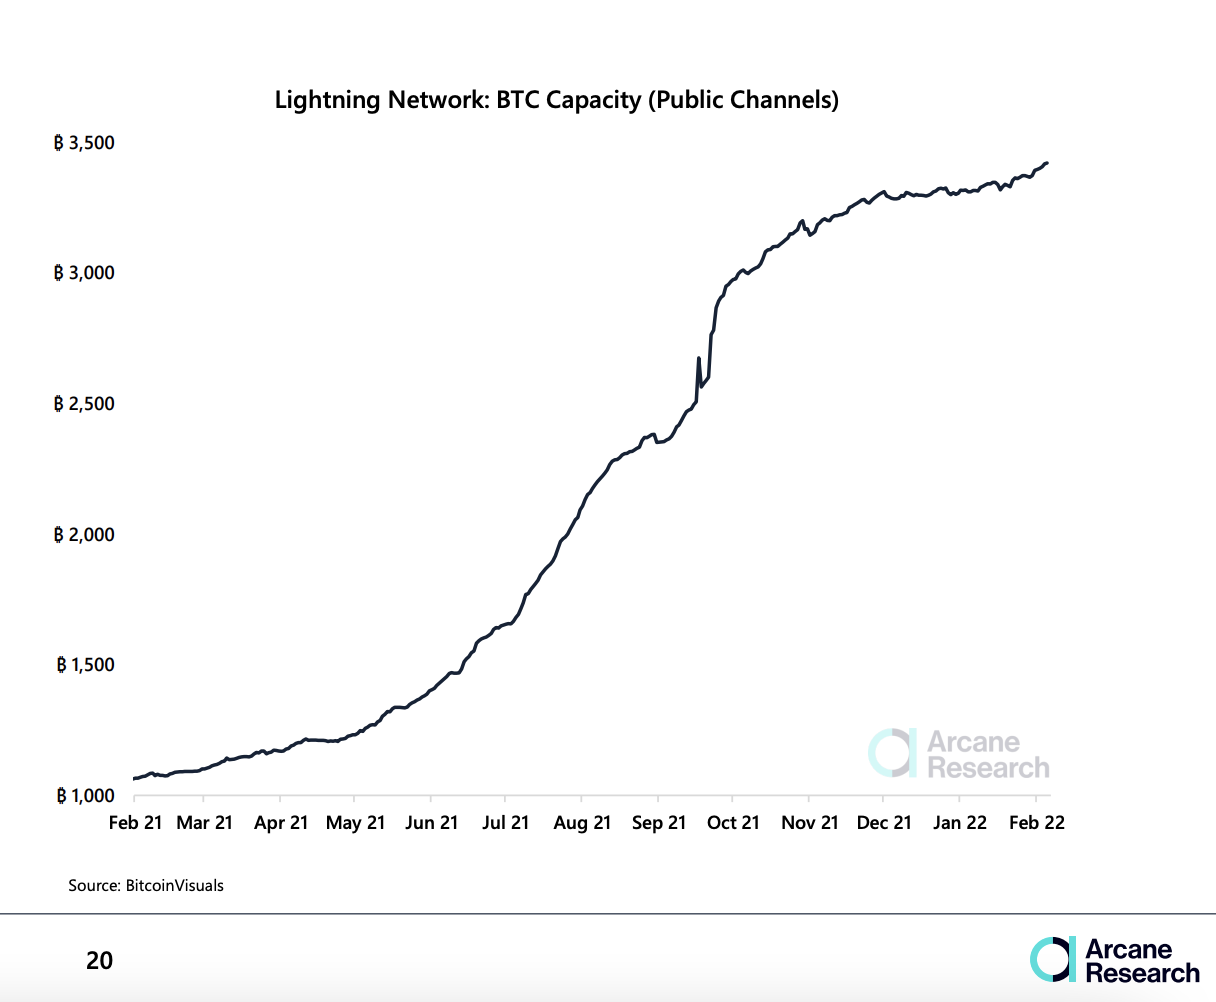 bitcoin lightning network growth capacity plateaus at 3400 btc 1